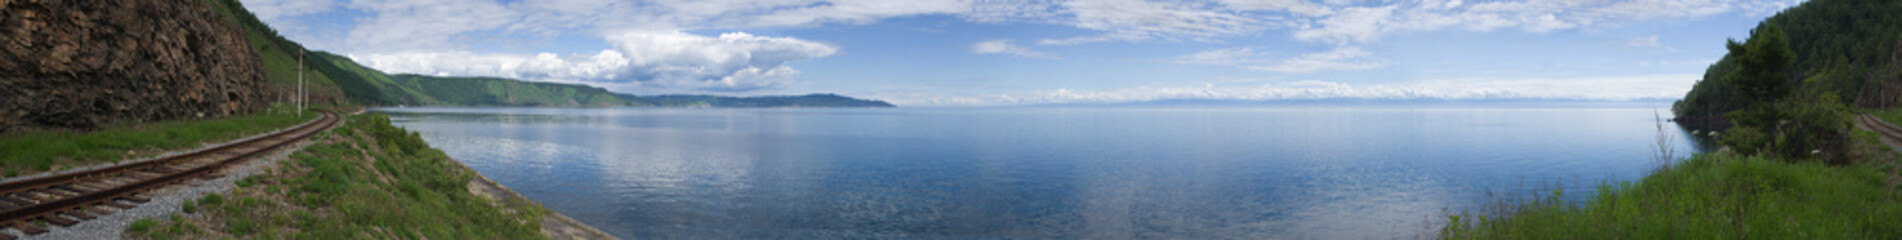 Panoramic photo of lake Baikal